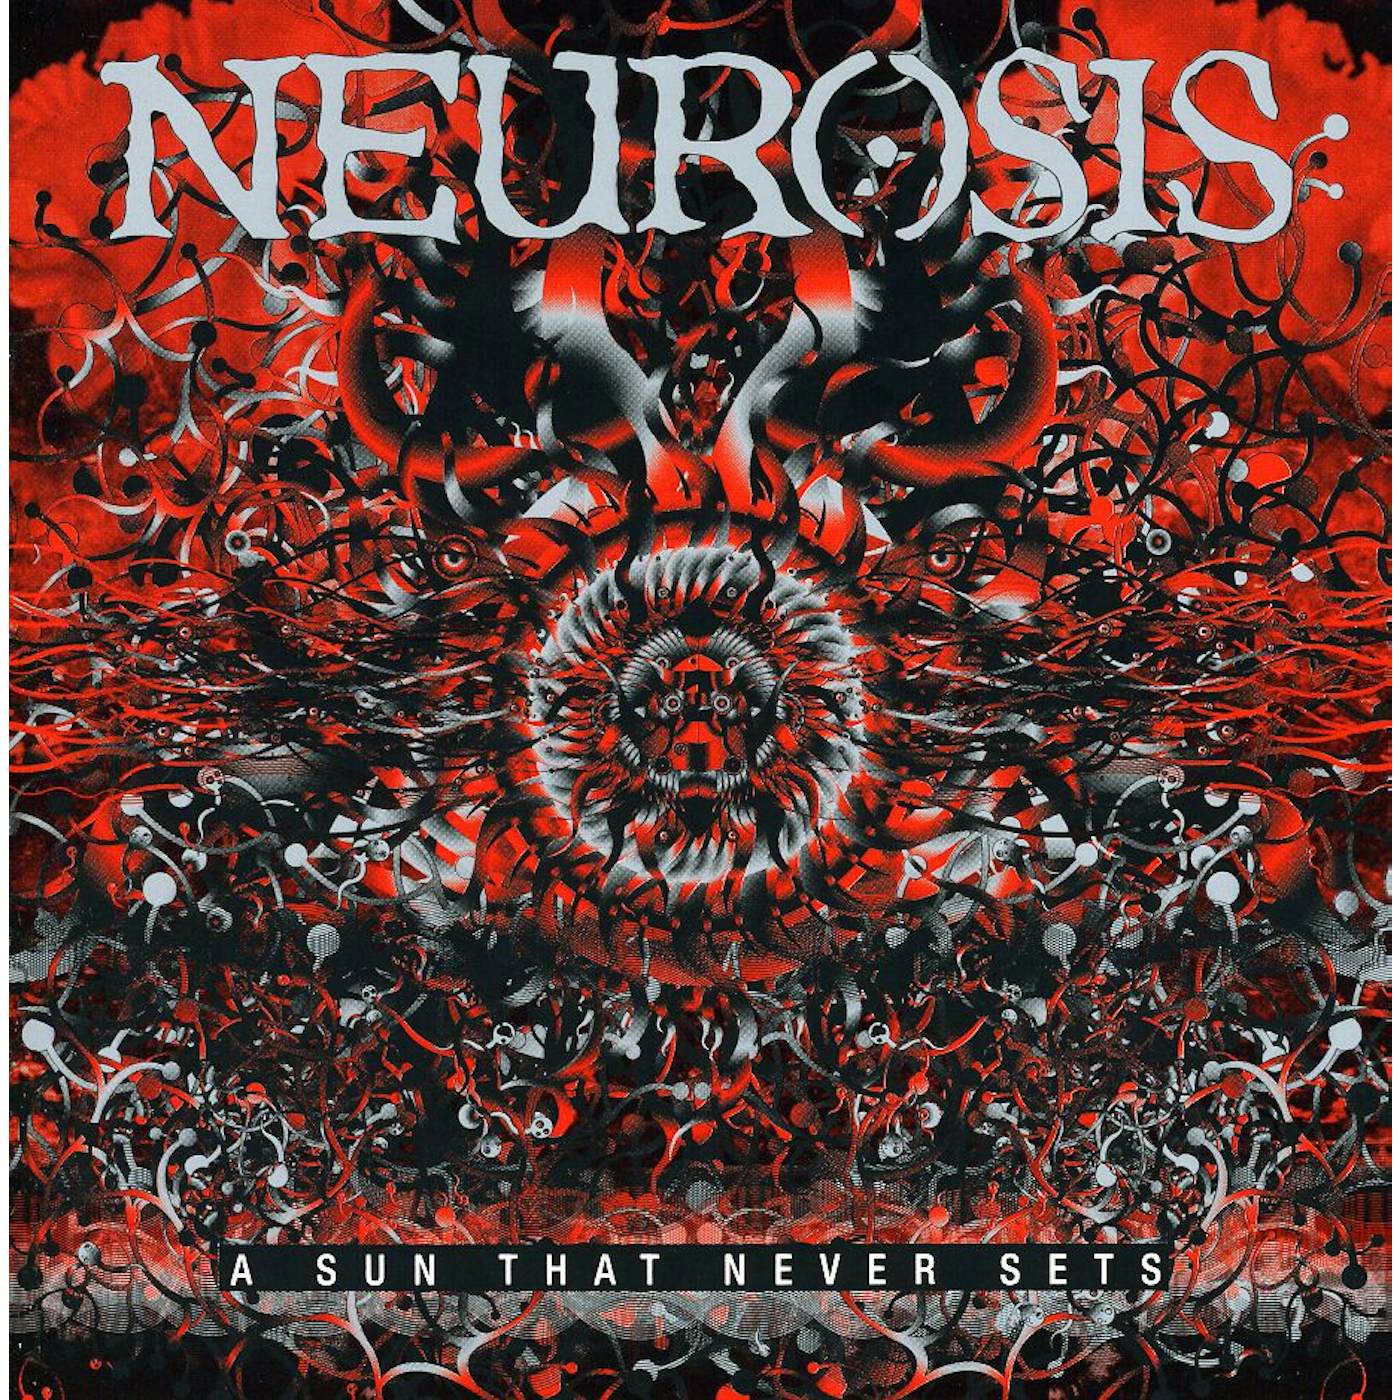 Neurosis SUN THAT NEVER SETS CD